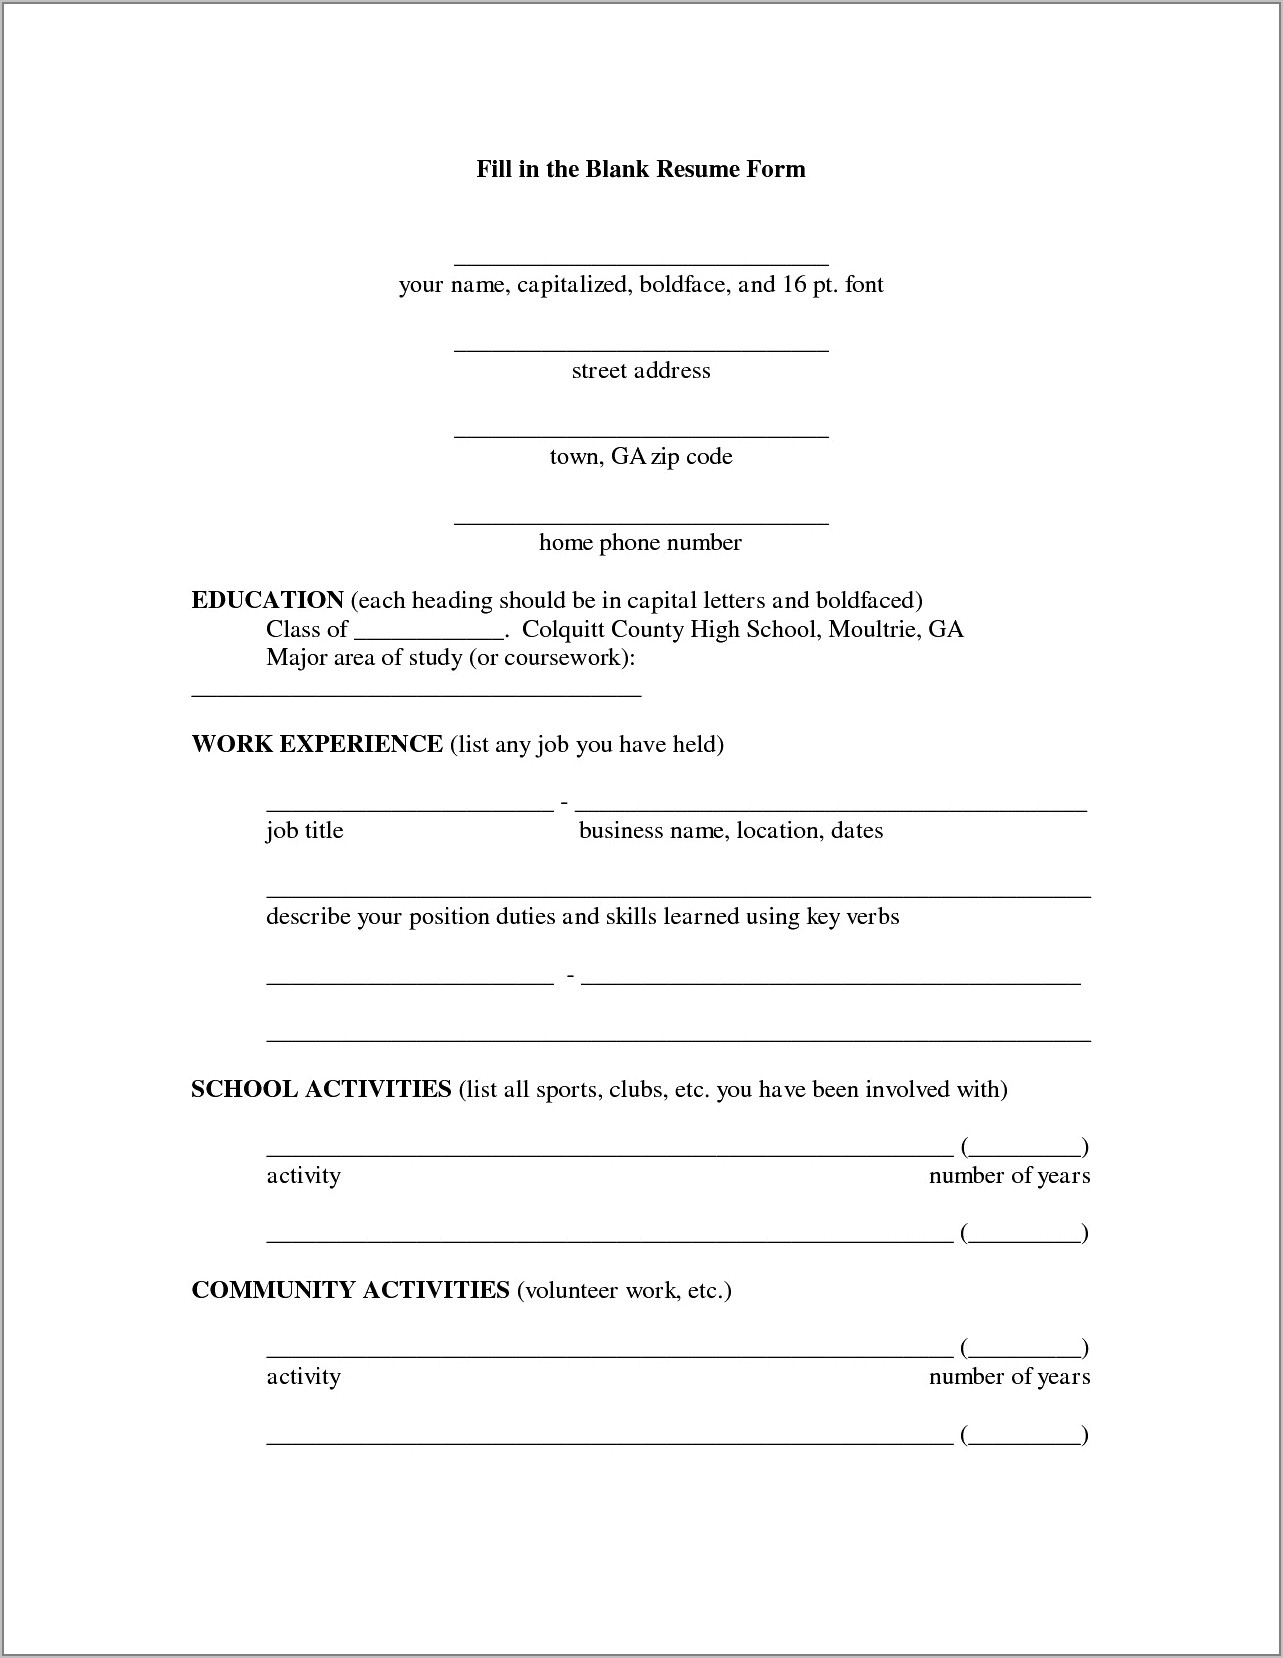 free-printable-cv-examples-resume-restiumani-resume-nvlwvlvo9l